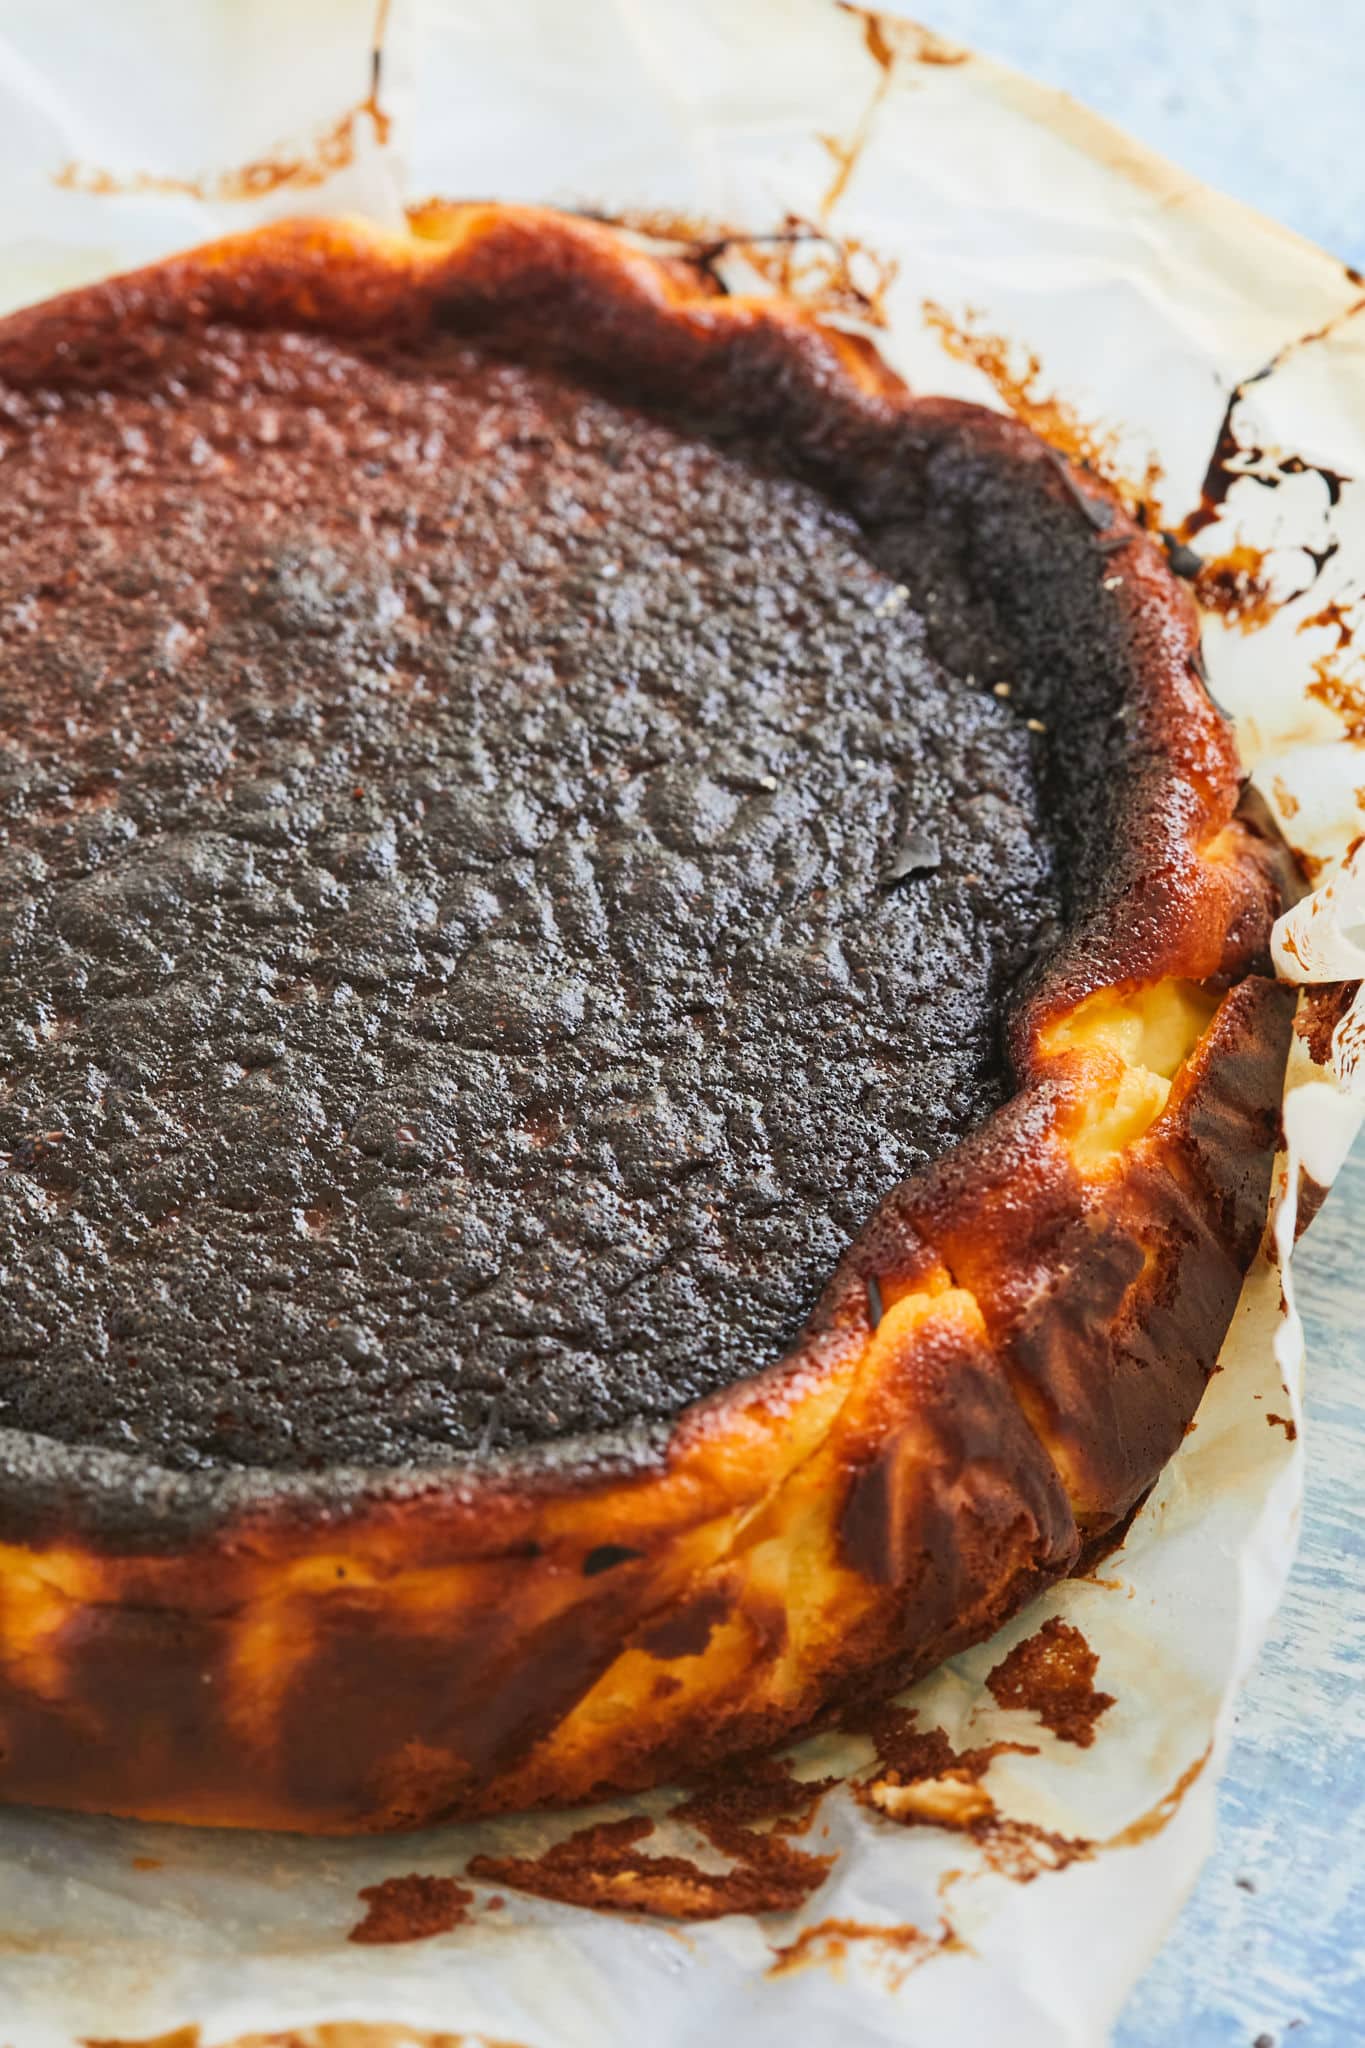 A full burnt basque cheesecake.